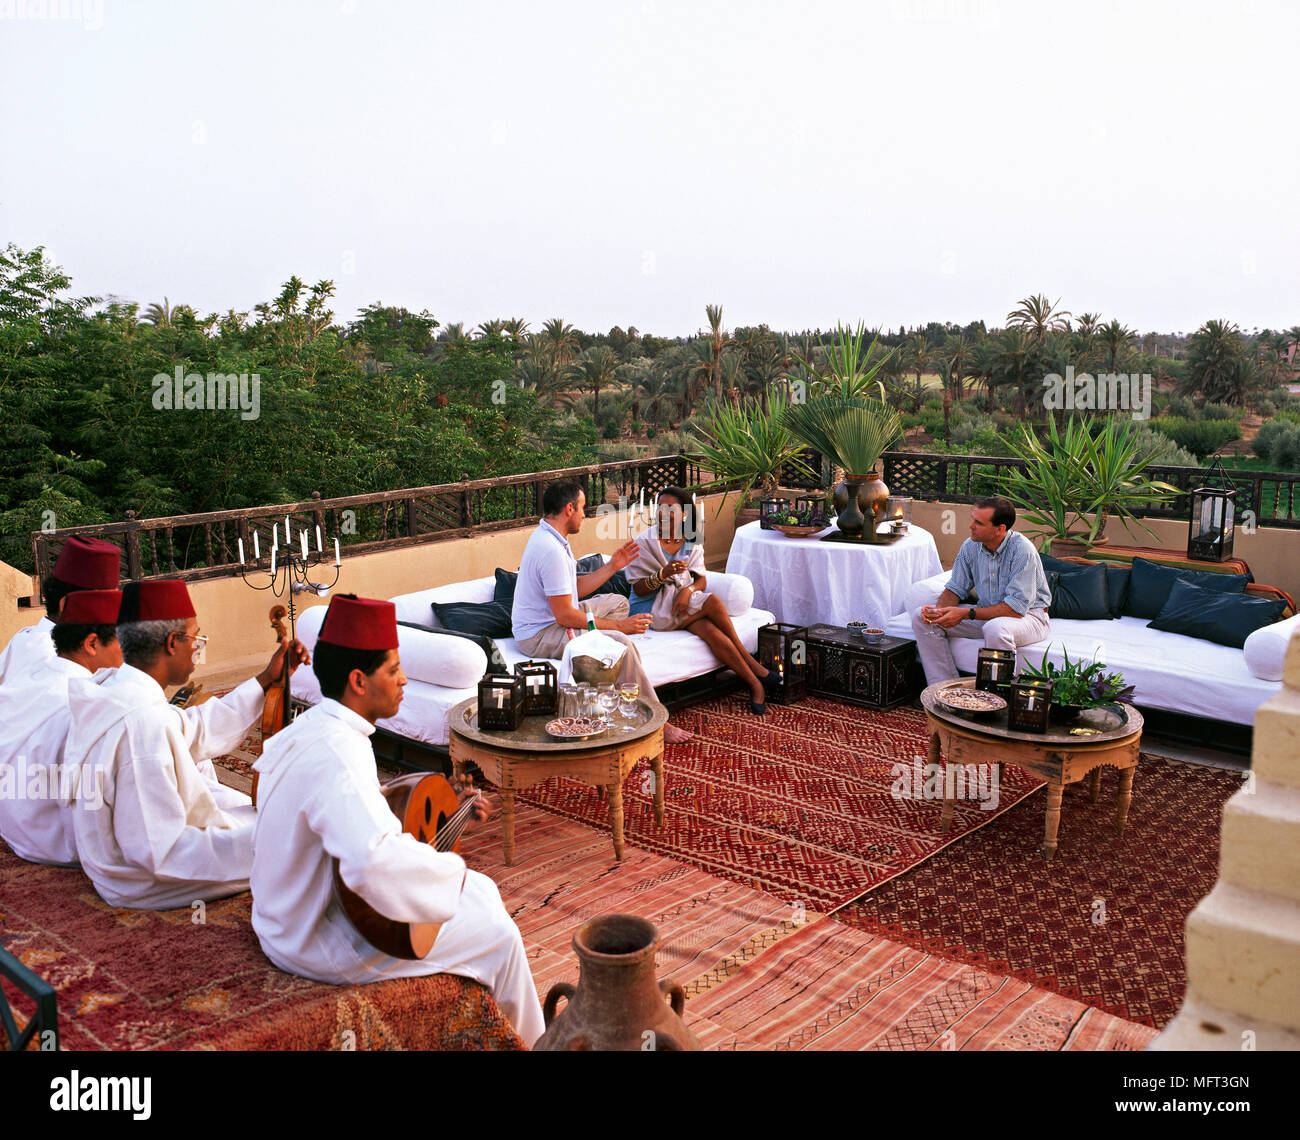 Guests on hotel balcony Moroccan musicians Exteriors hotels arabian arabic moorish outdoor entertaining Stock Photo